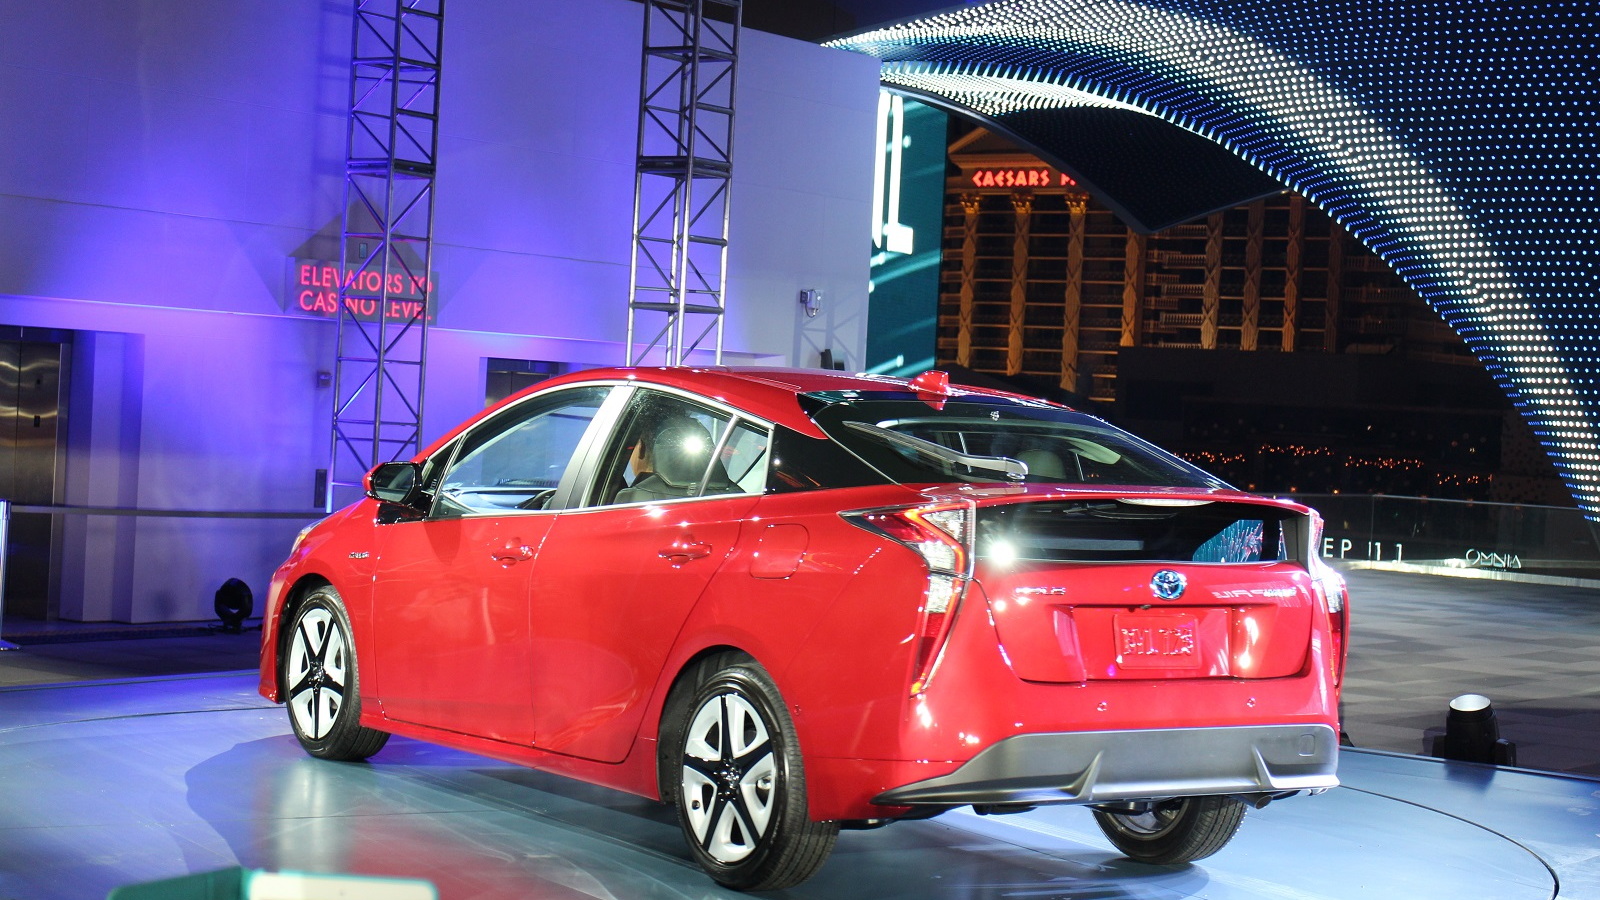 2016 Toyota Prius, global launch, Las Vegas, Sept 2016